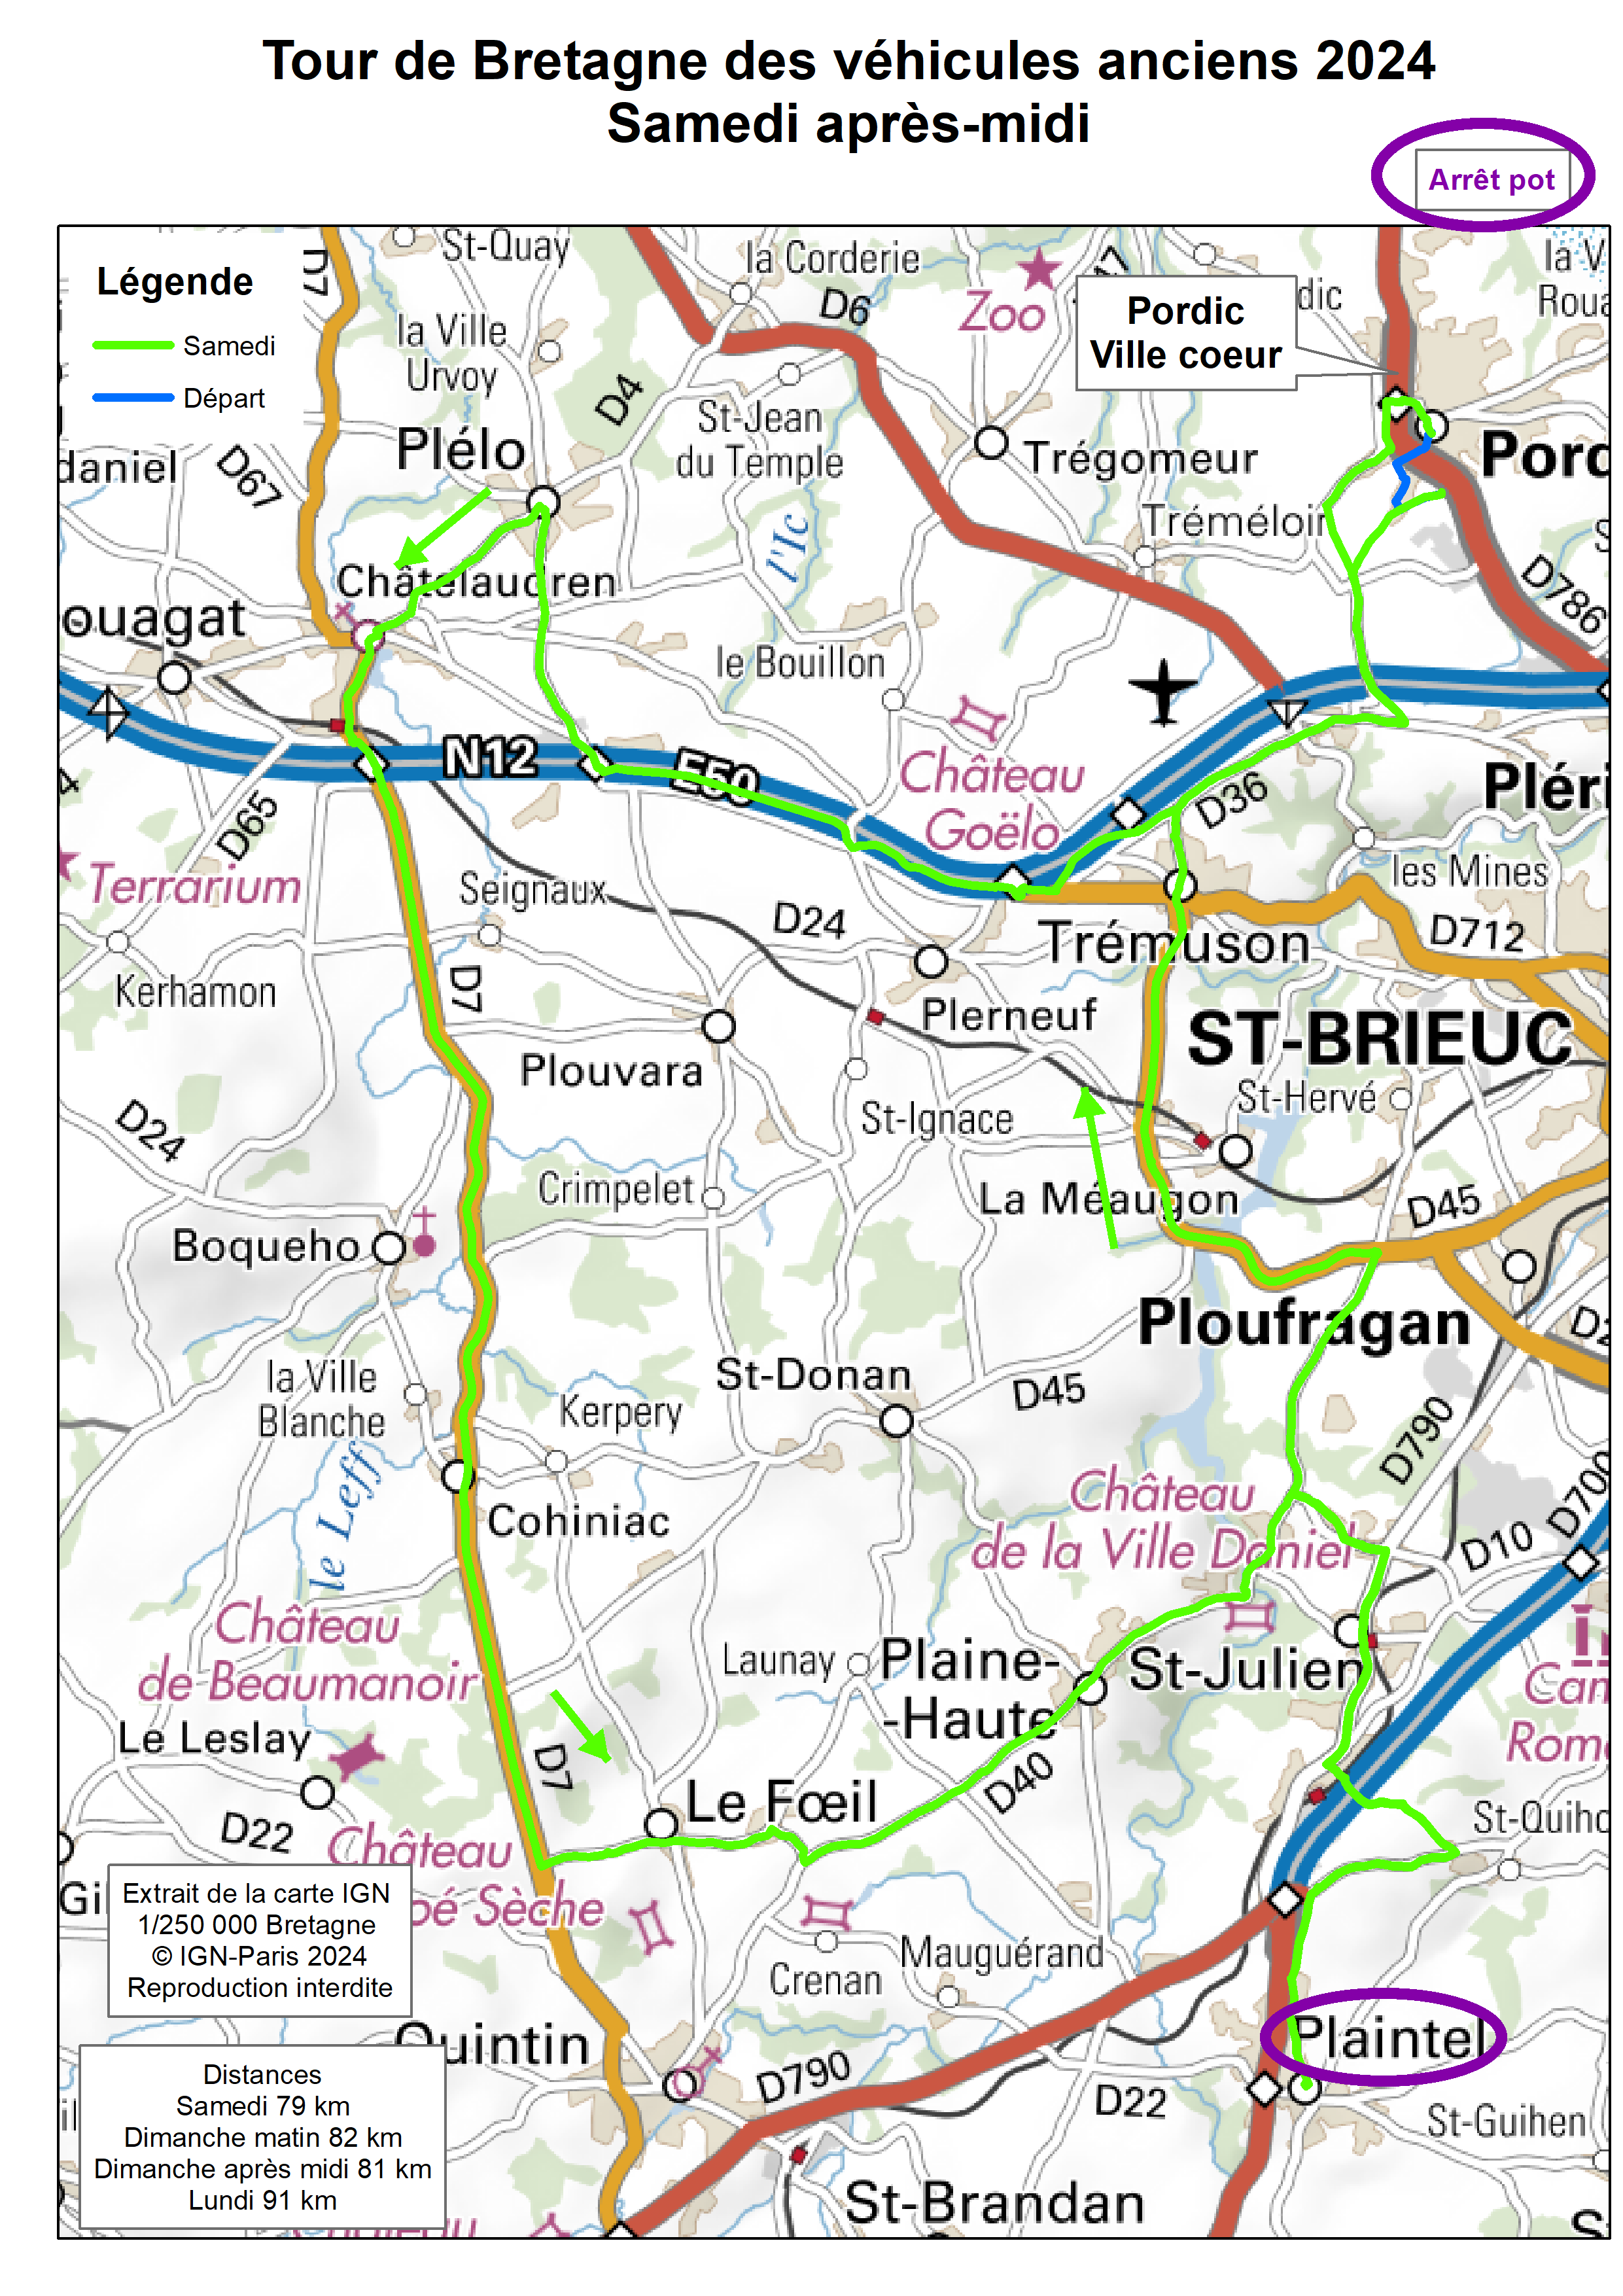 tour - Tour de Bretagne 2024 Ciruit_tour_de_bretagne_2024_samedi_v2